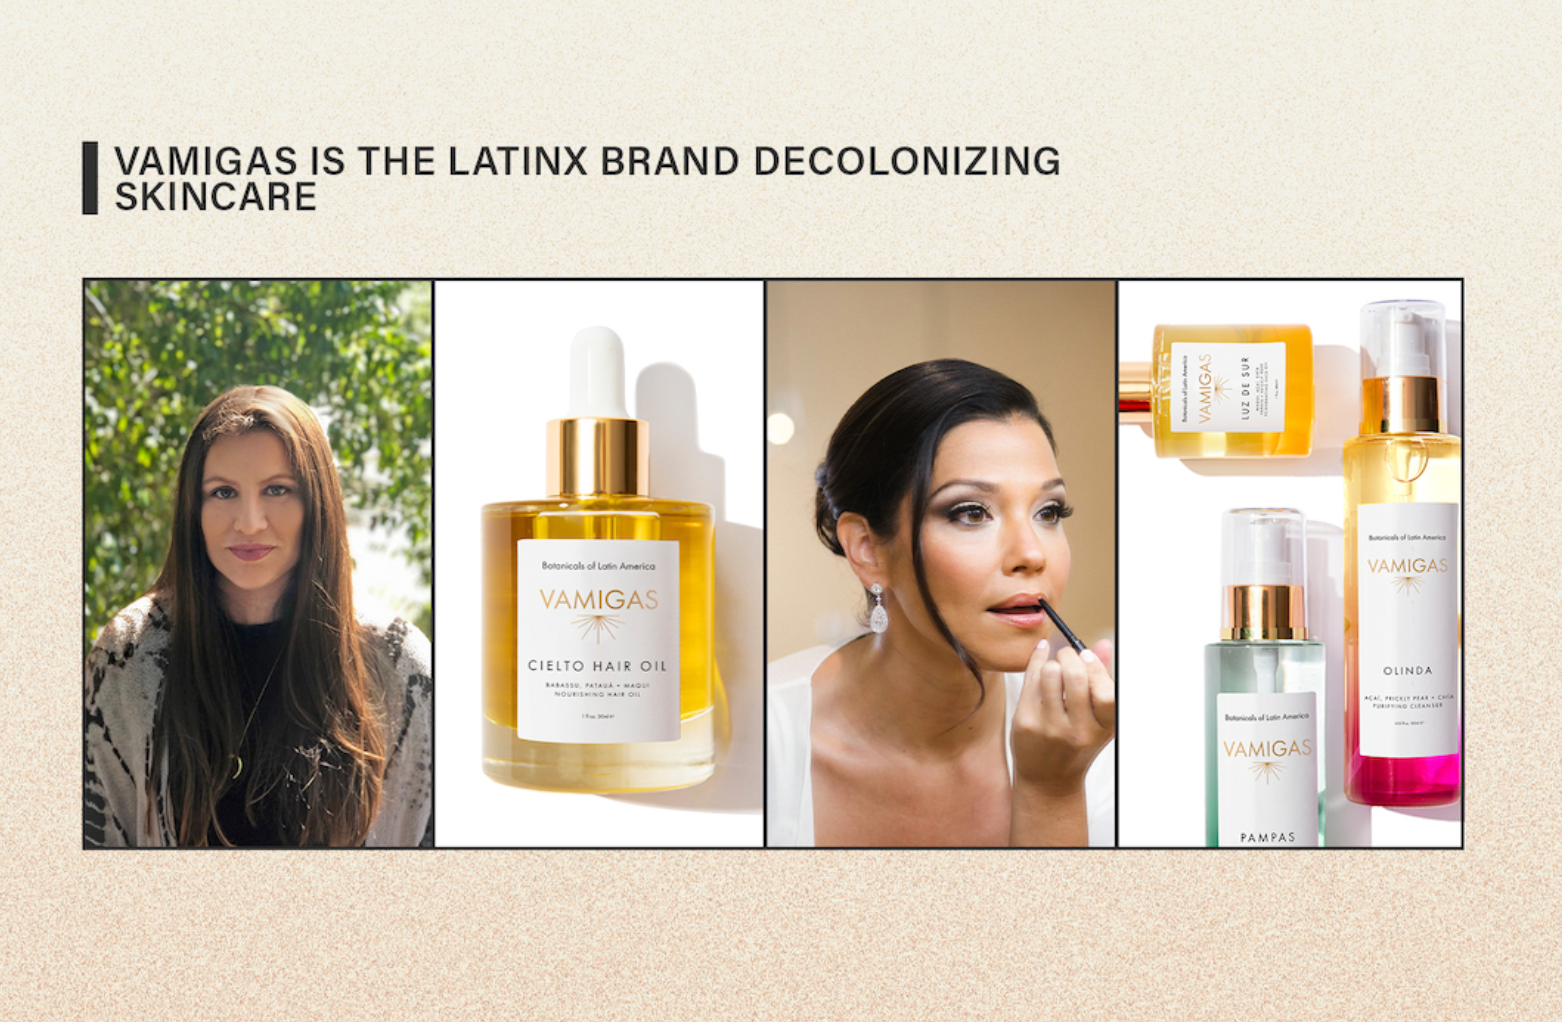 HYPEBAE: The Latinx Brand Decolonizing Skincare